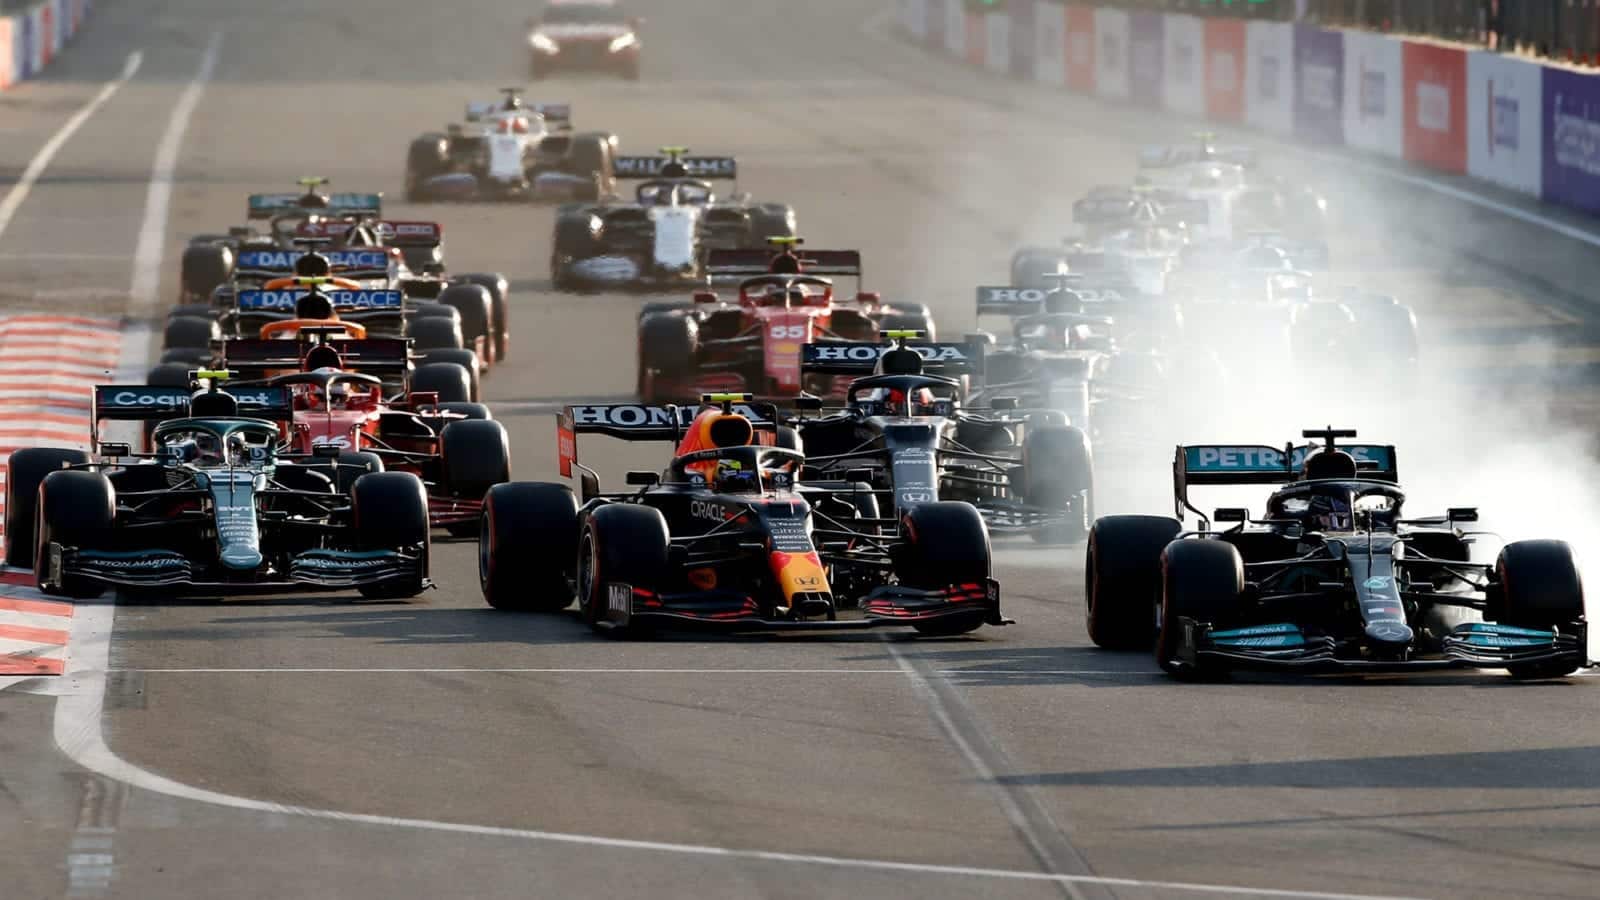 Lewis Hamilton locks up at 2021 Azerbaijan Grand Prix restart